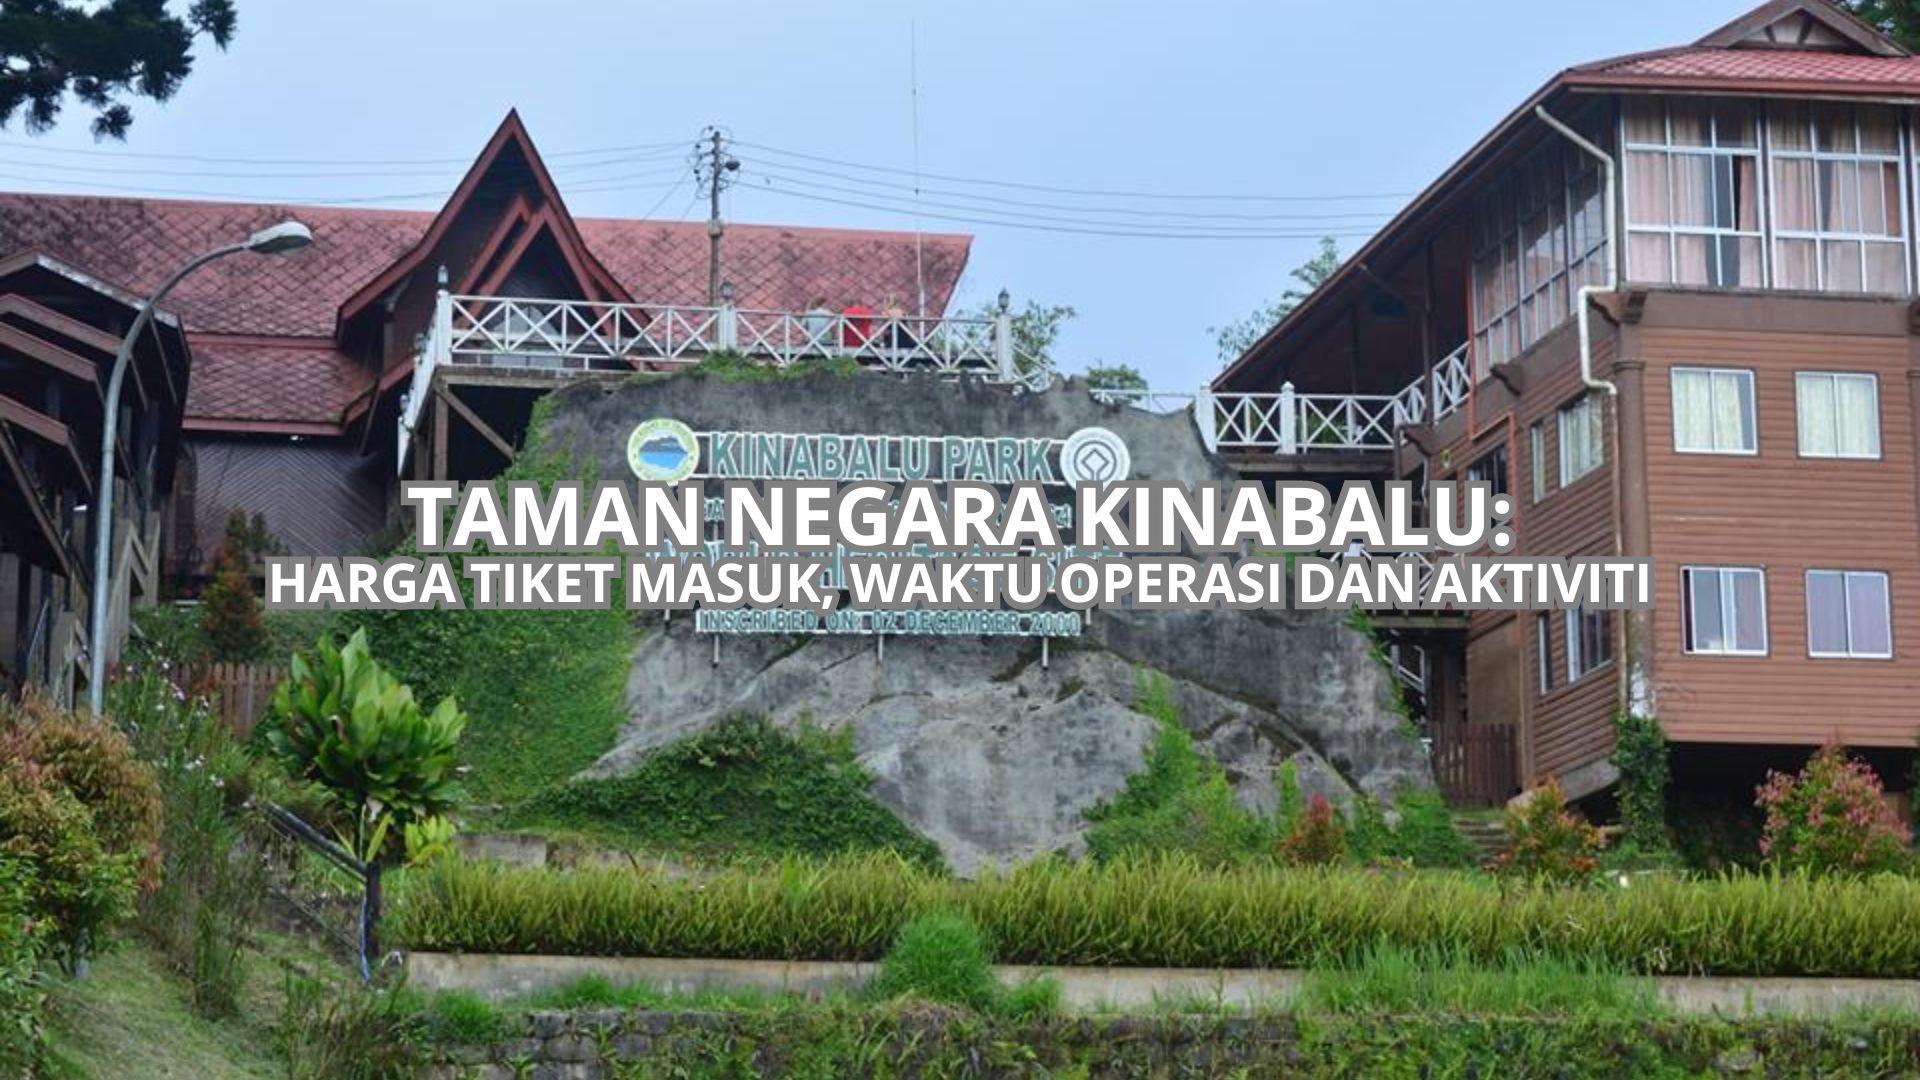 Taman Negara Kinabalu Cover